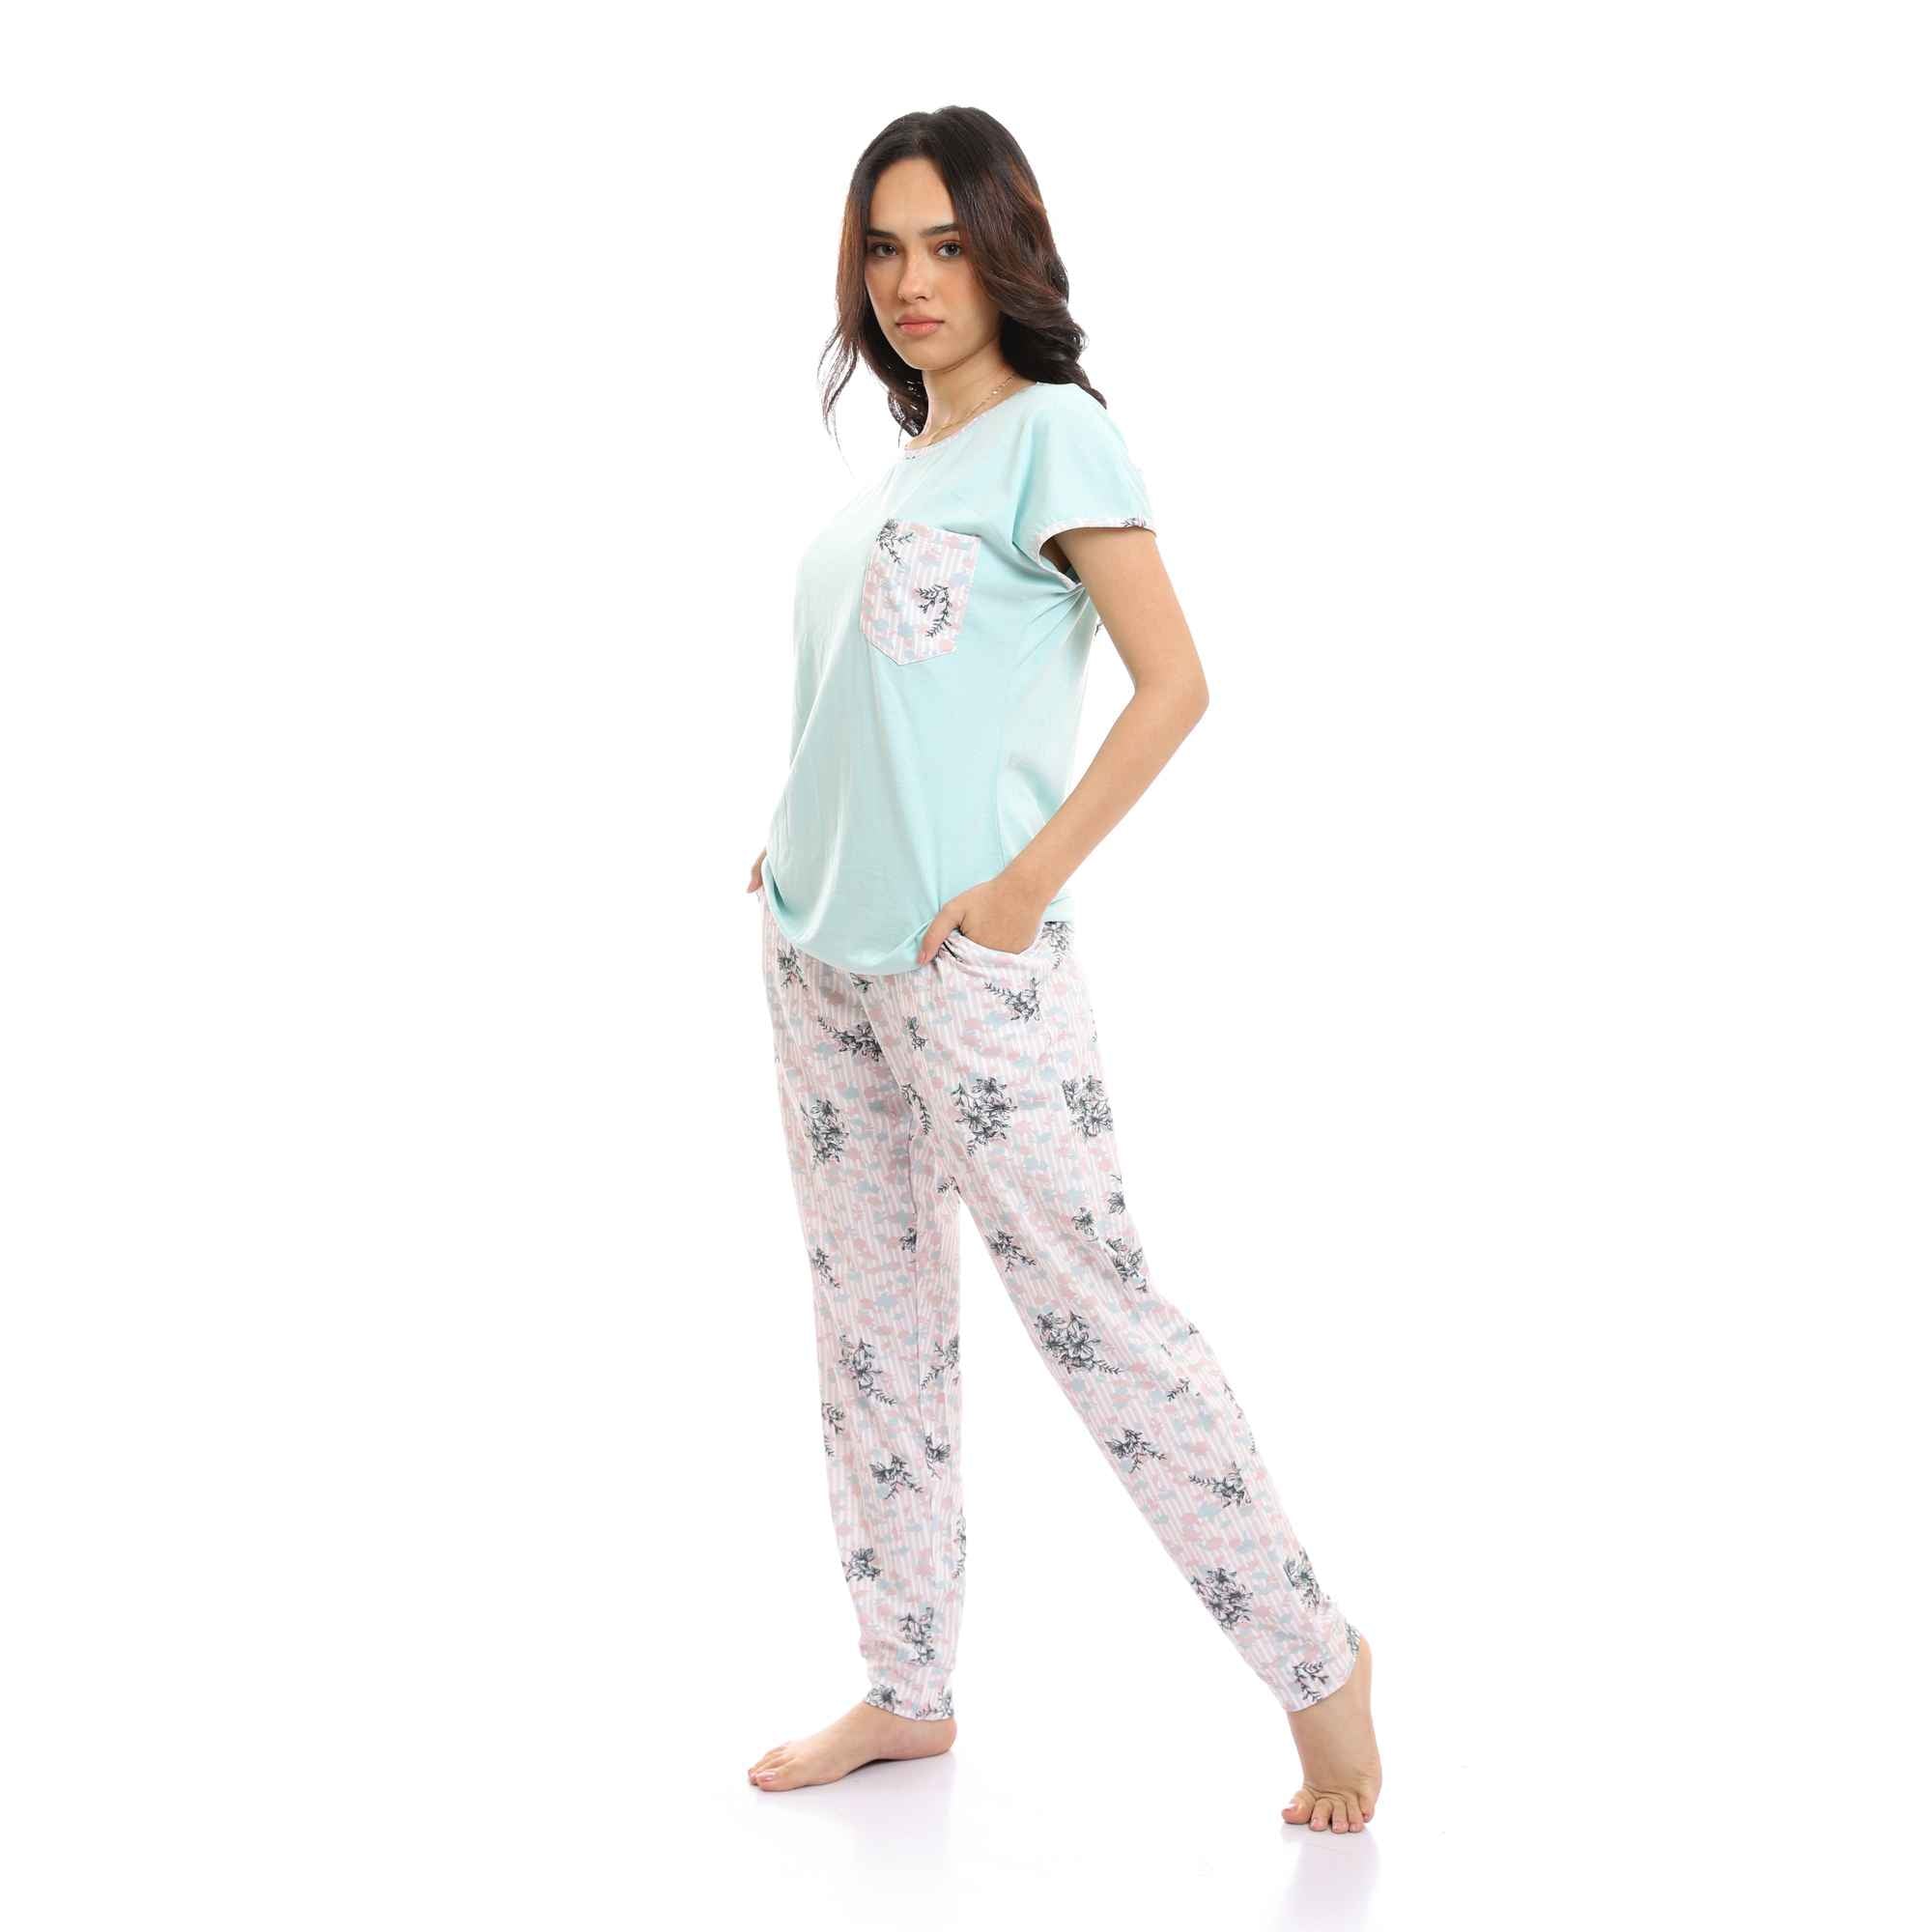 Short Sleeves Tee & Patterned Pants Pajama Set - Pastel Mint & Rose